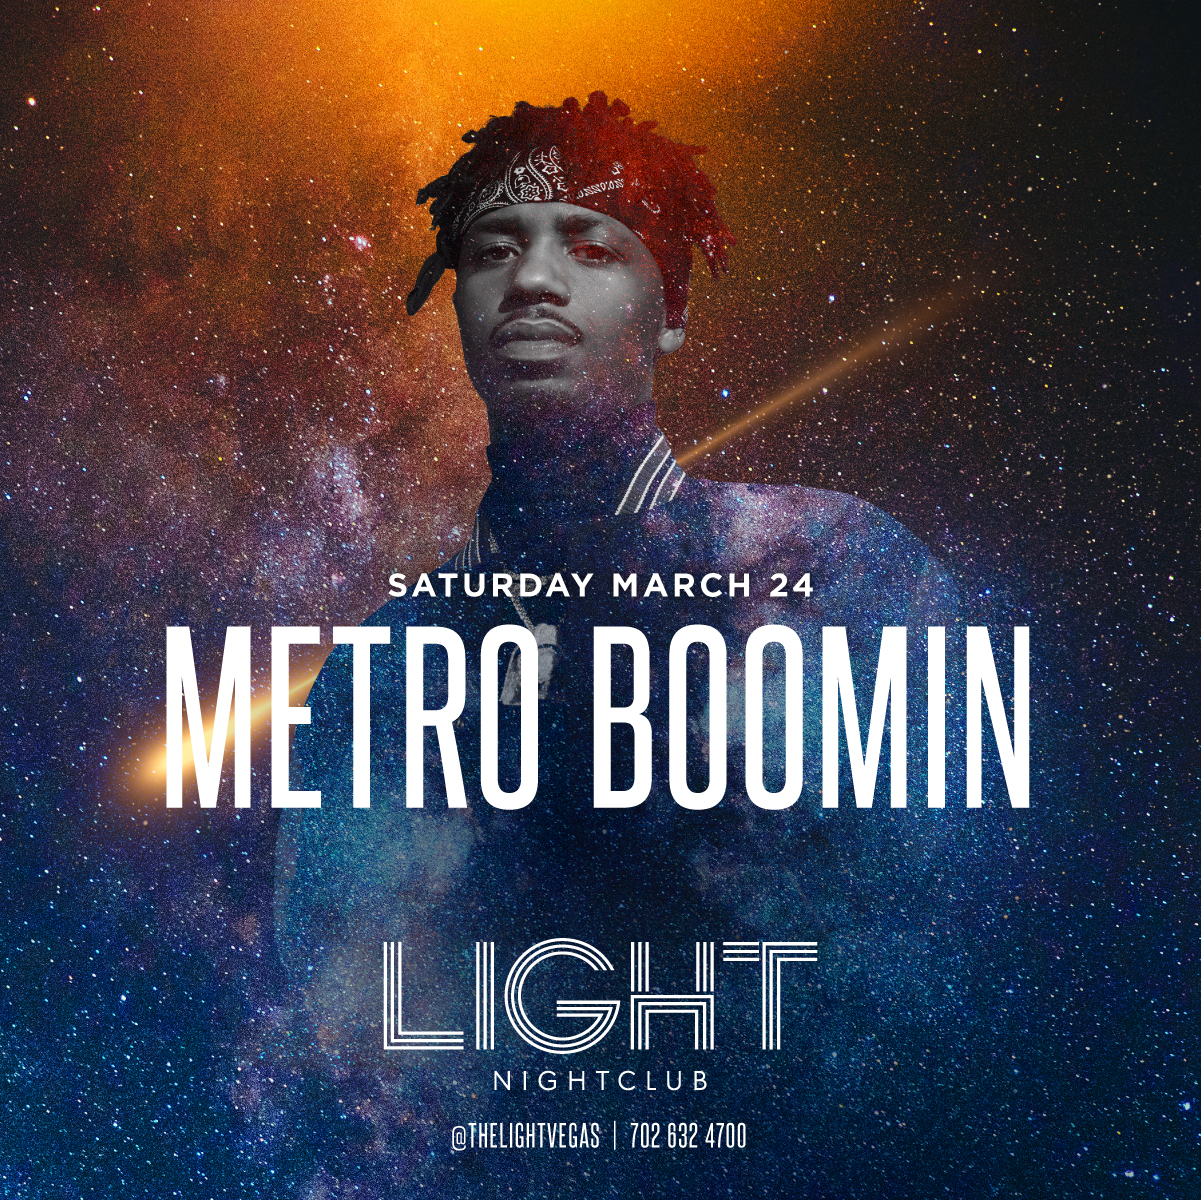 Metro Boomin Tickets 03/24/18